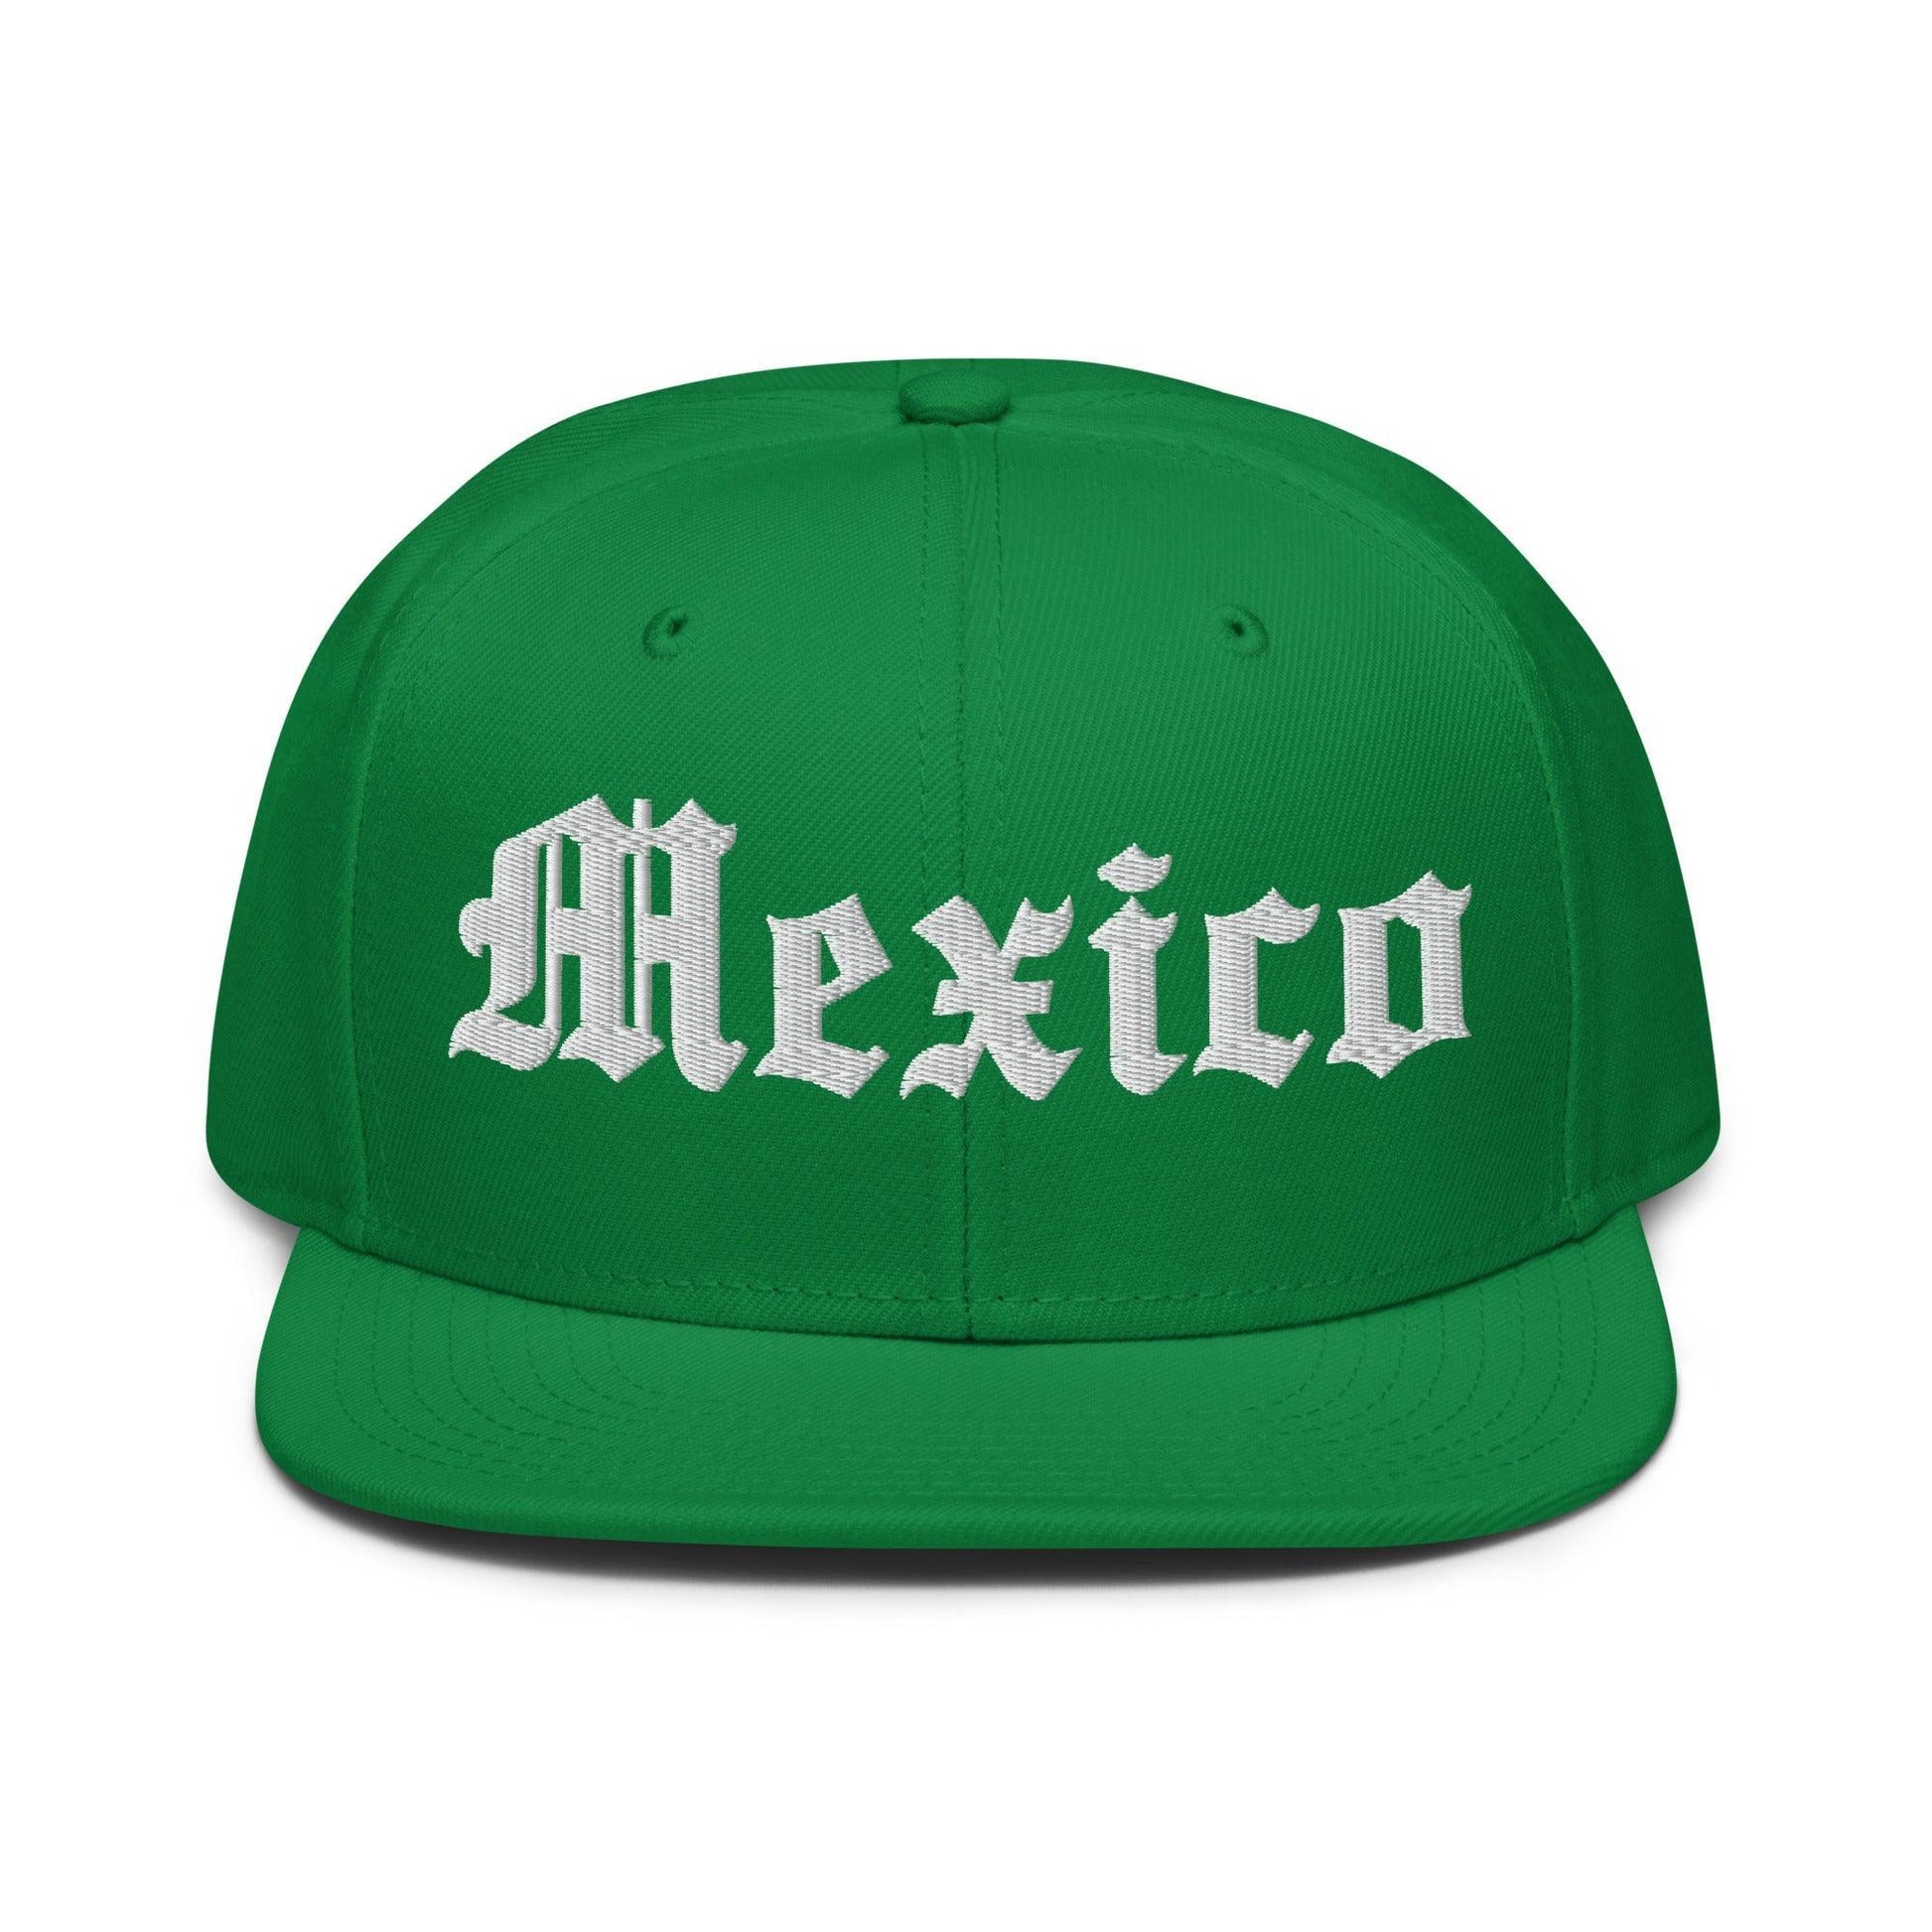 Mexico III Old English Snapback Hat Kelly Green